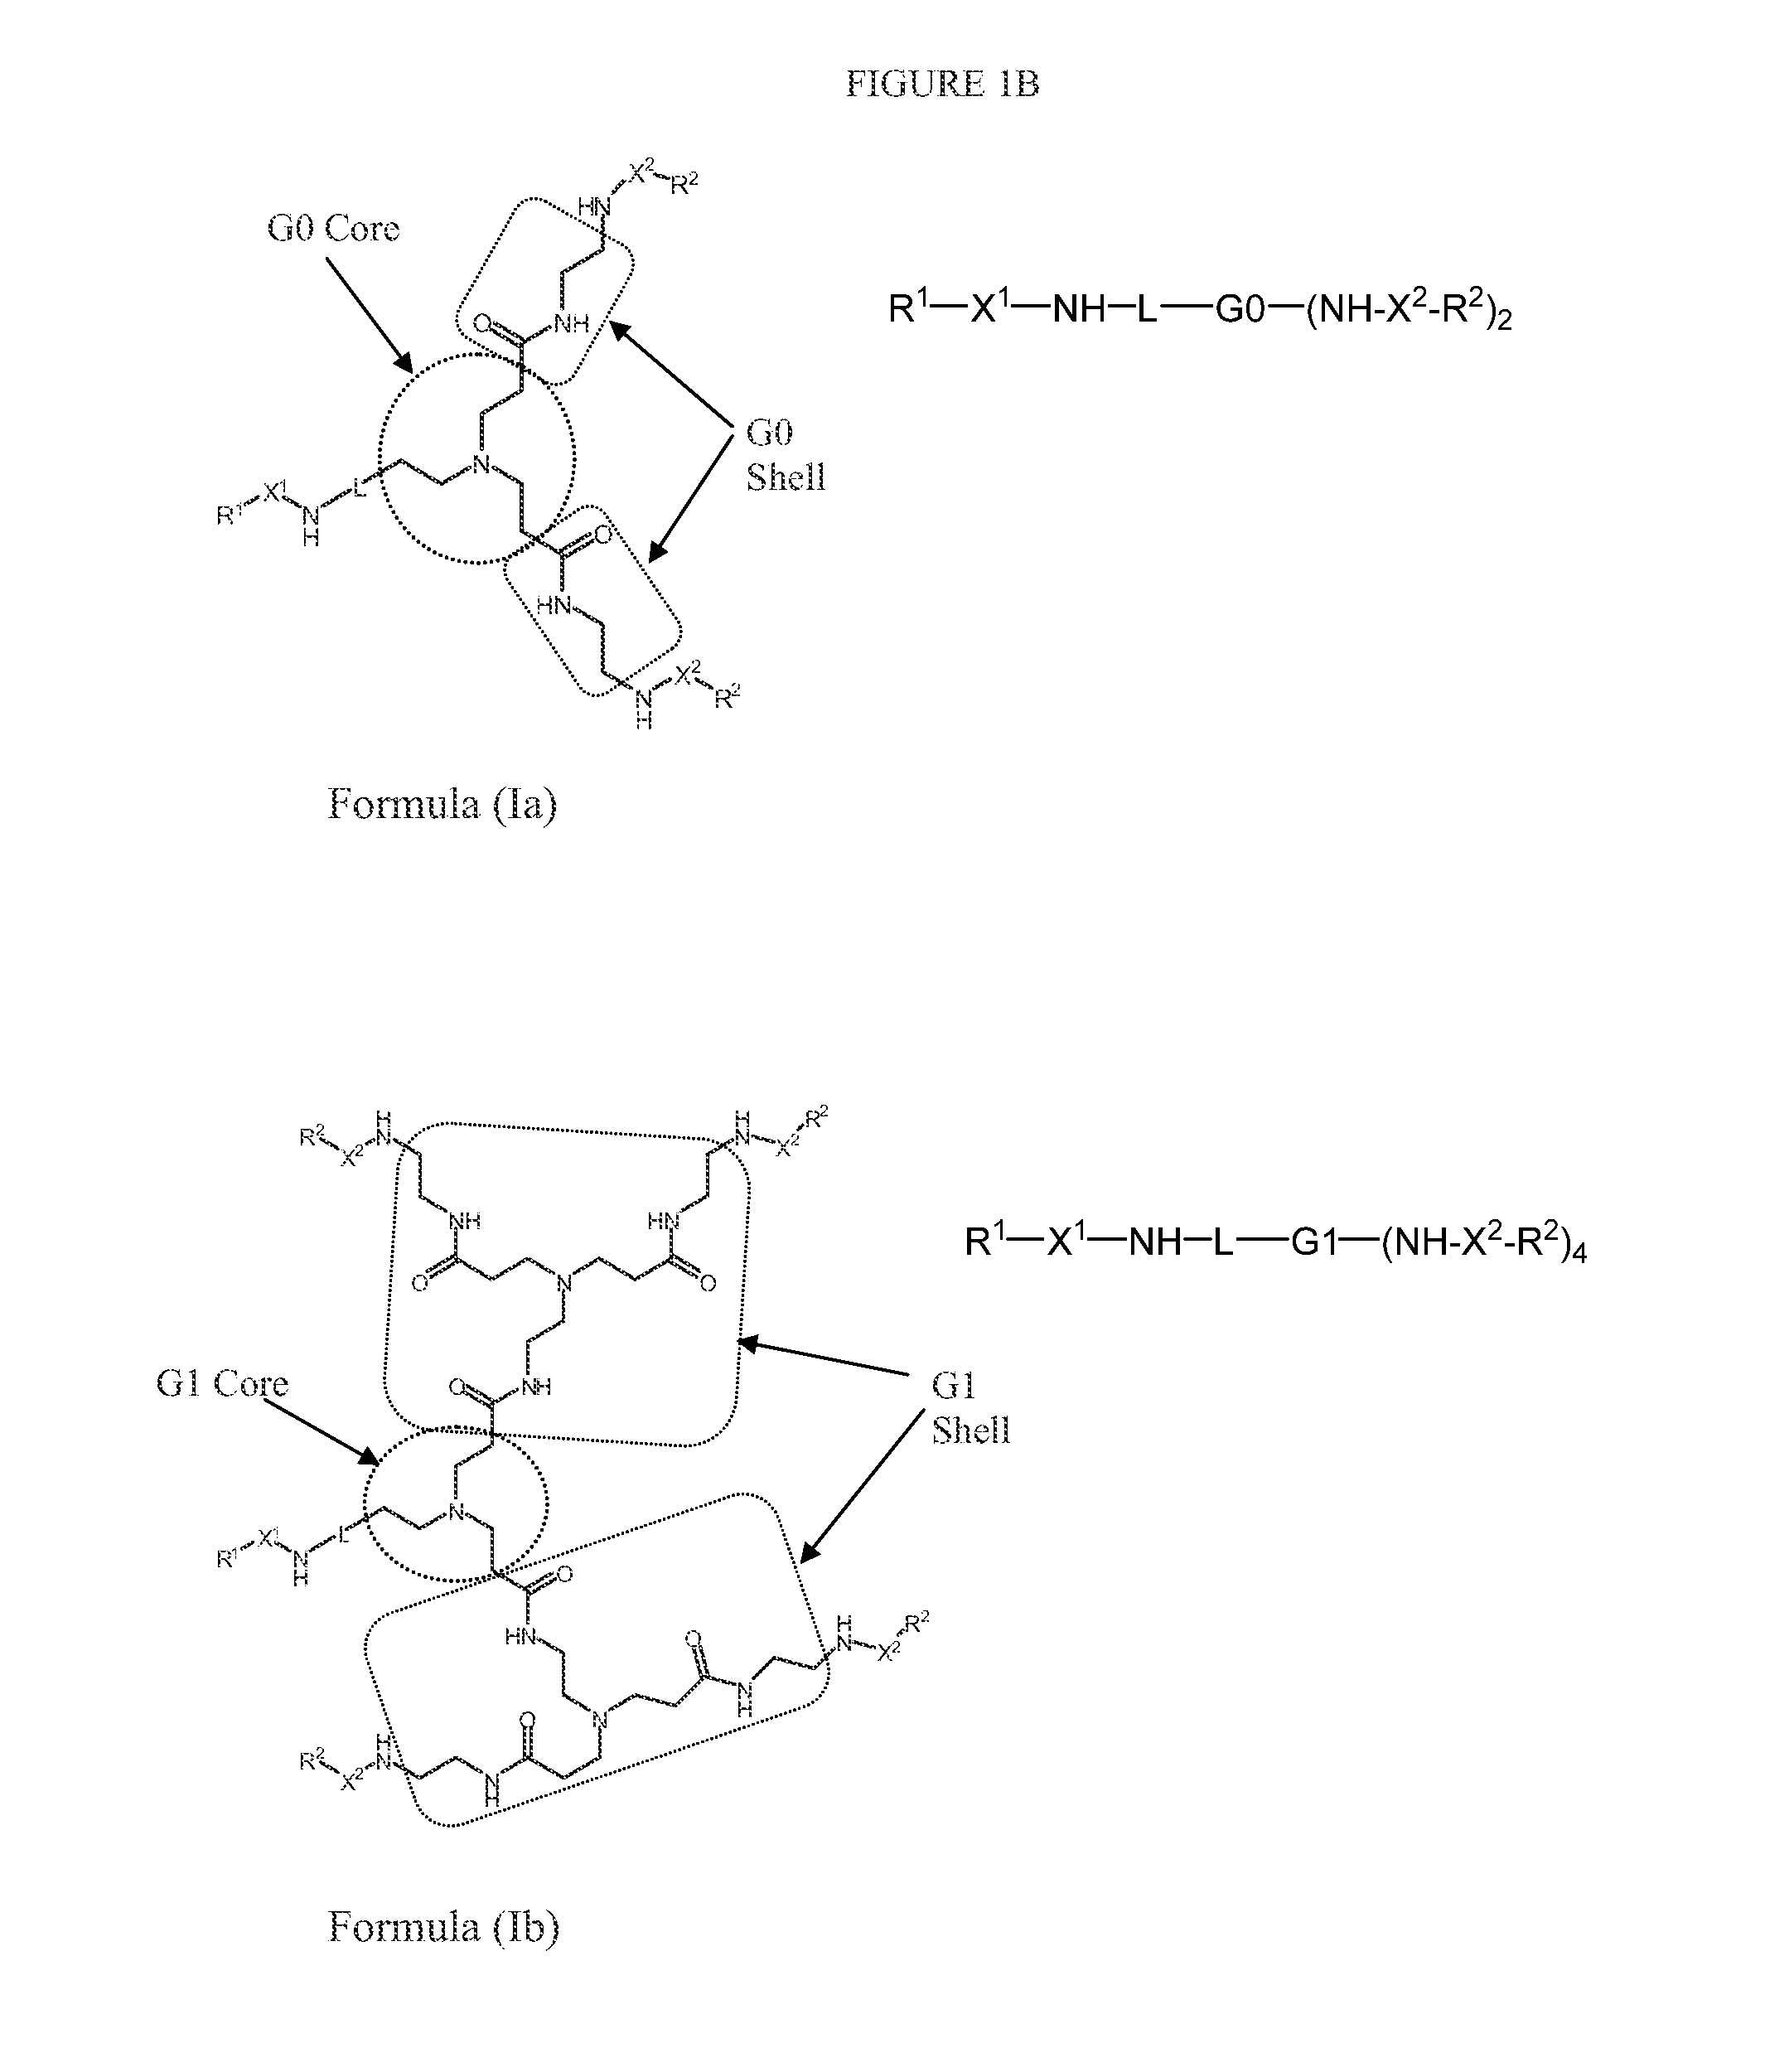 N-boc-dendrimers and their conjugates